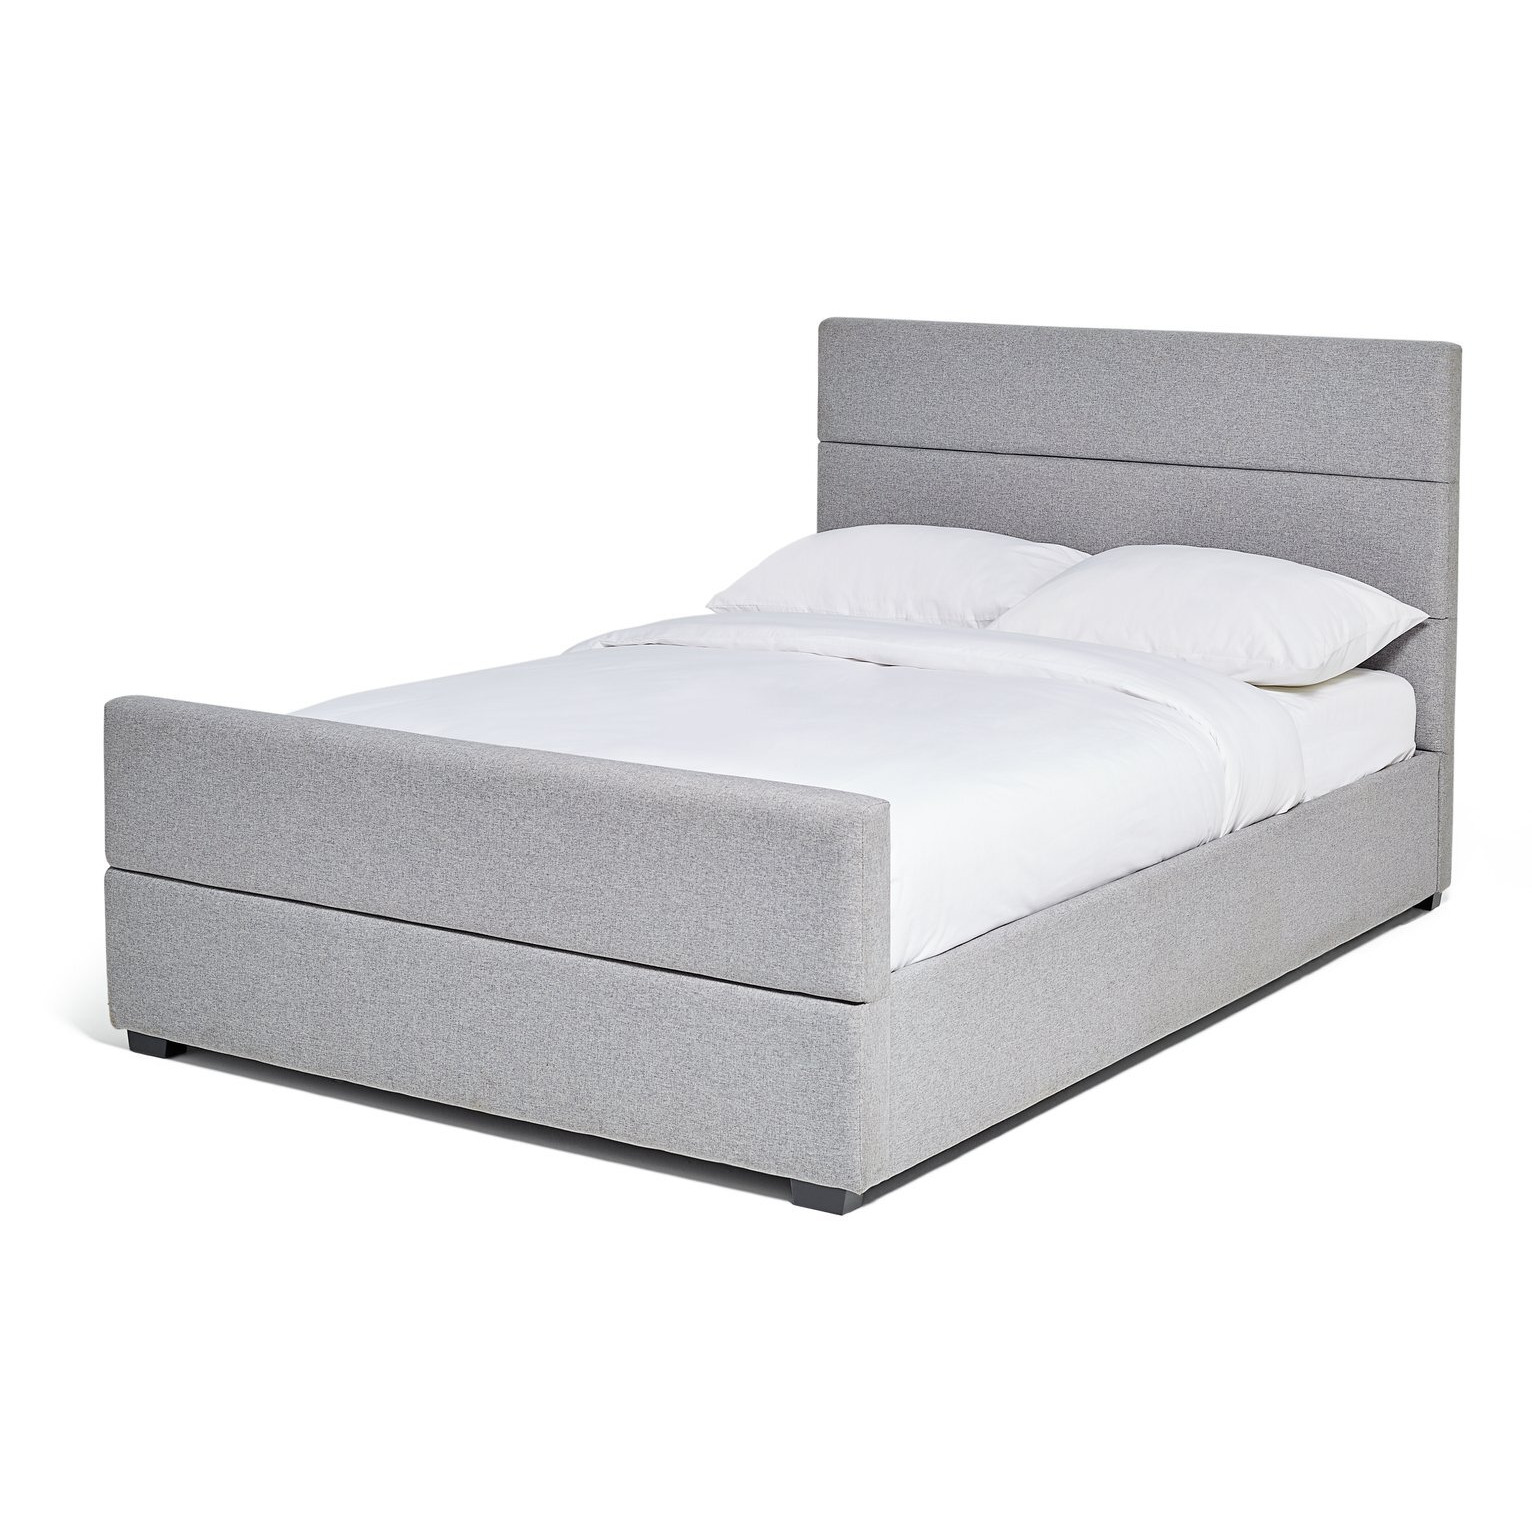 Argos Home Costa Fabric Superking Ottoman Bed Frame - Grey - image 1